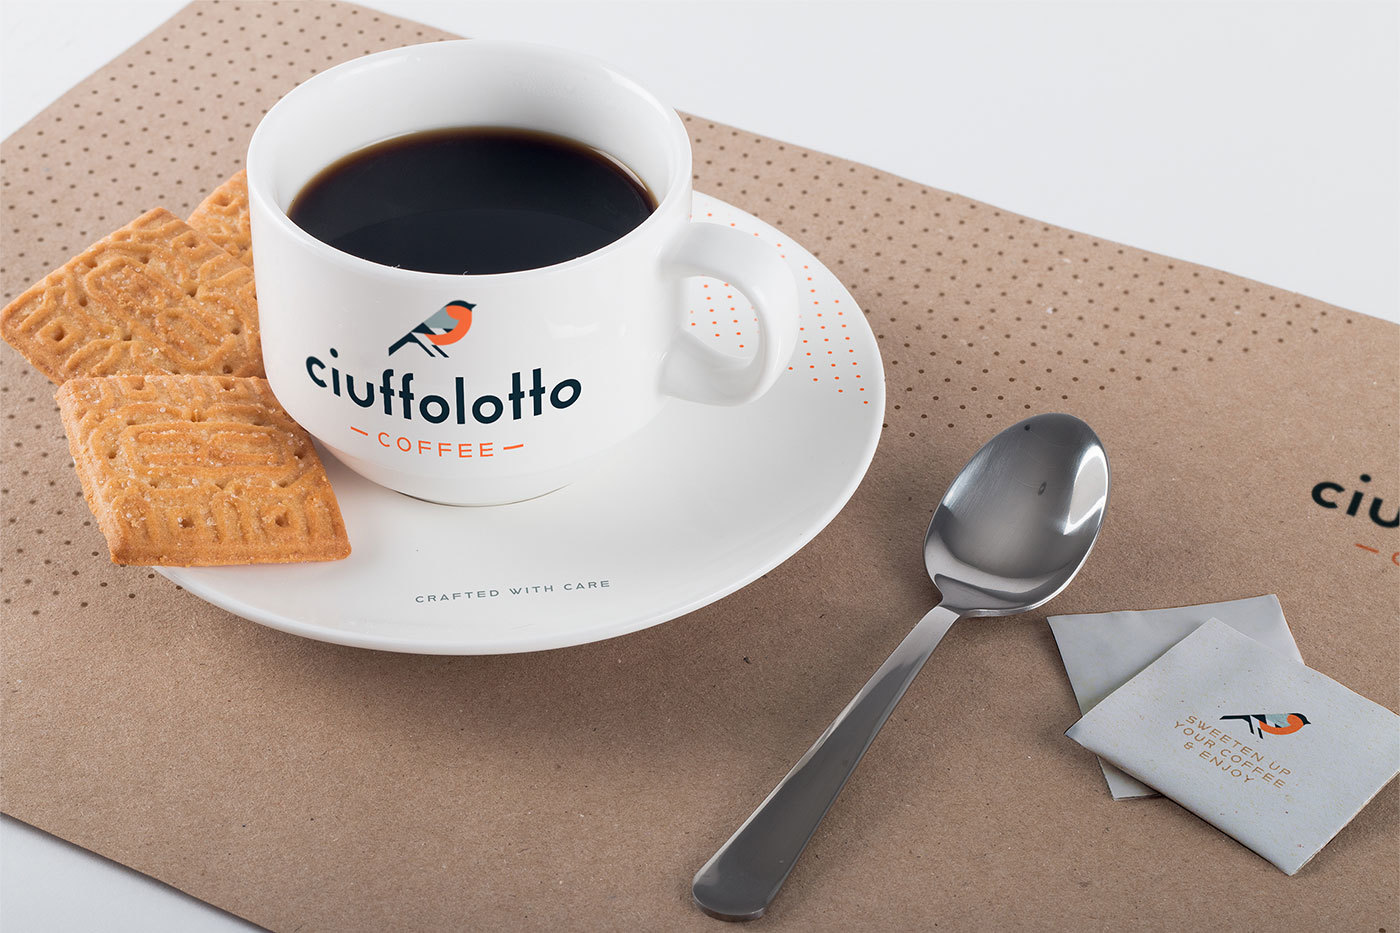 Ciuffolotto coffee brand design for the Adobe Hidden Treasures Béhance Challenge